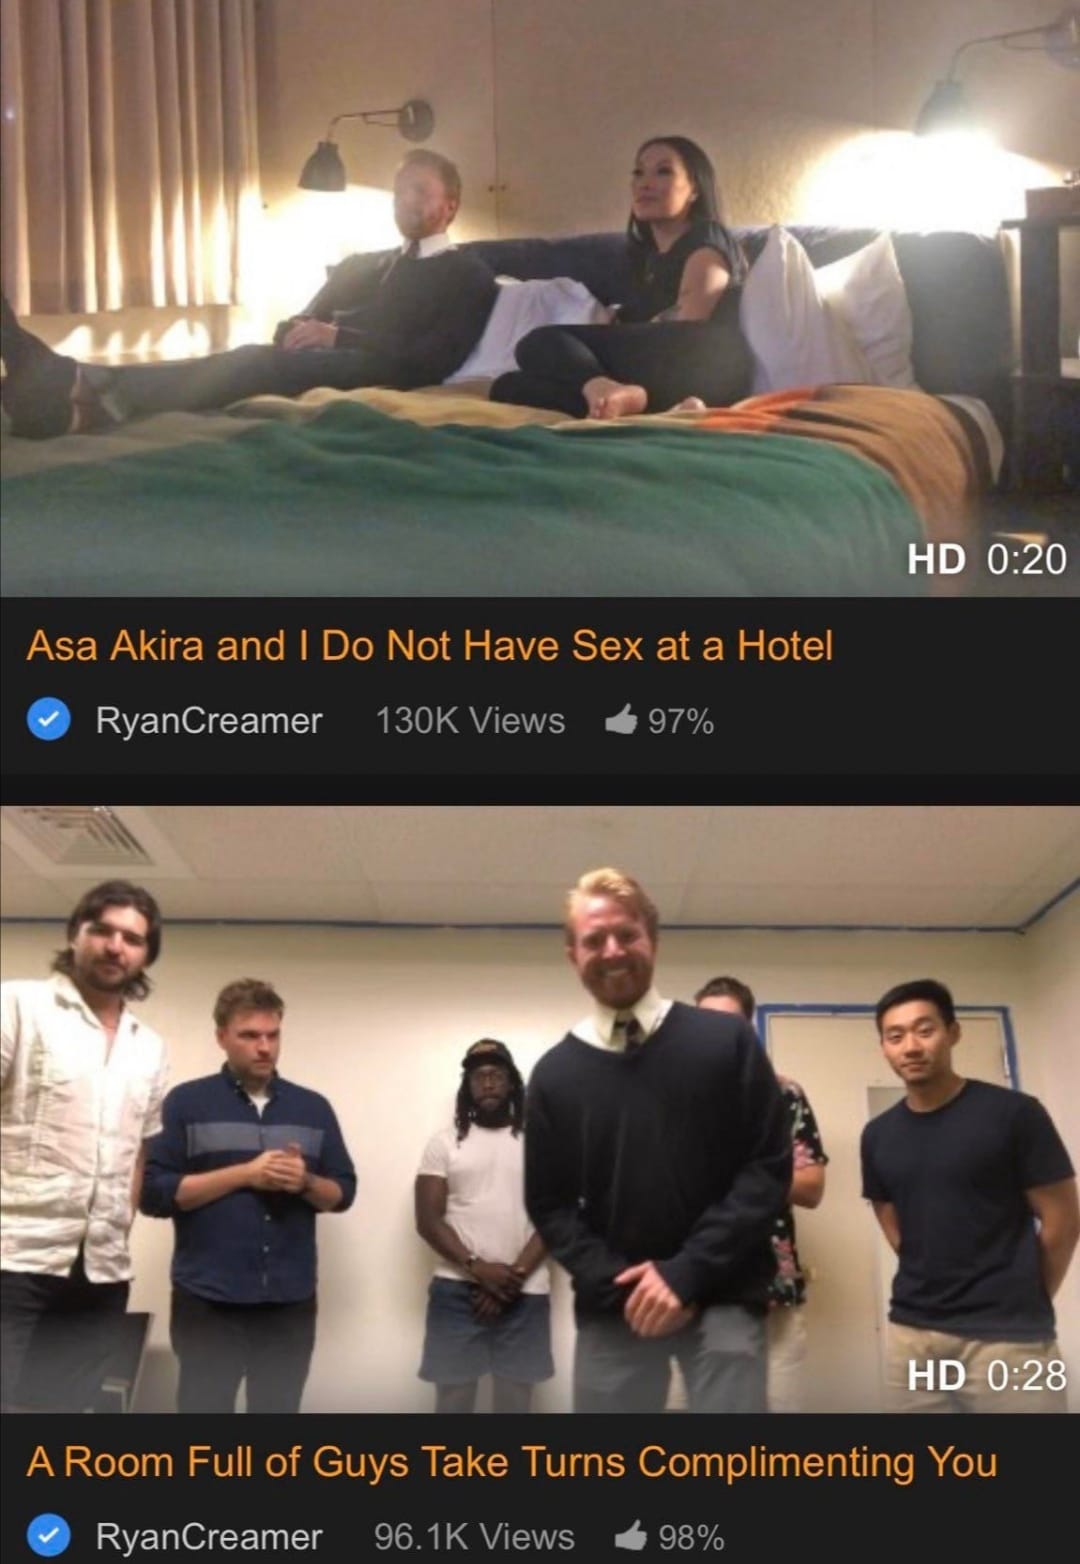 ryan creamer asa akira - Hd Asa Akira and I Do Not Have Sex at a Hotel RyanCreamer Views 97% Hd A Room Full of Guys Take Turns Complimenting You RyanCreamer Views 98%